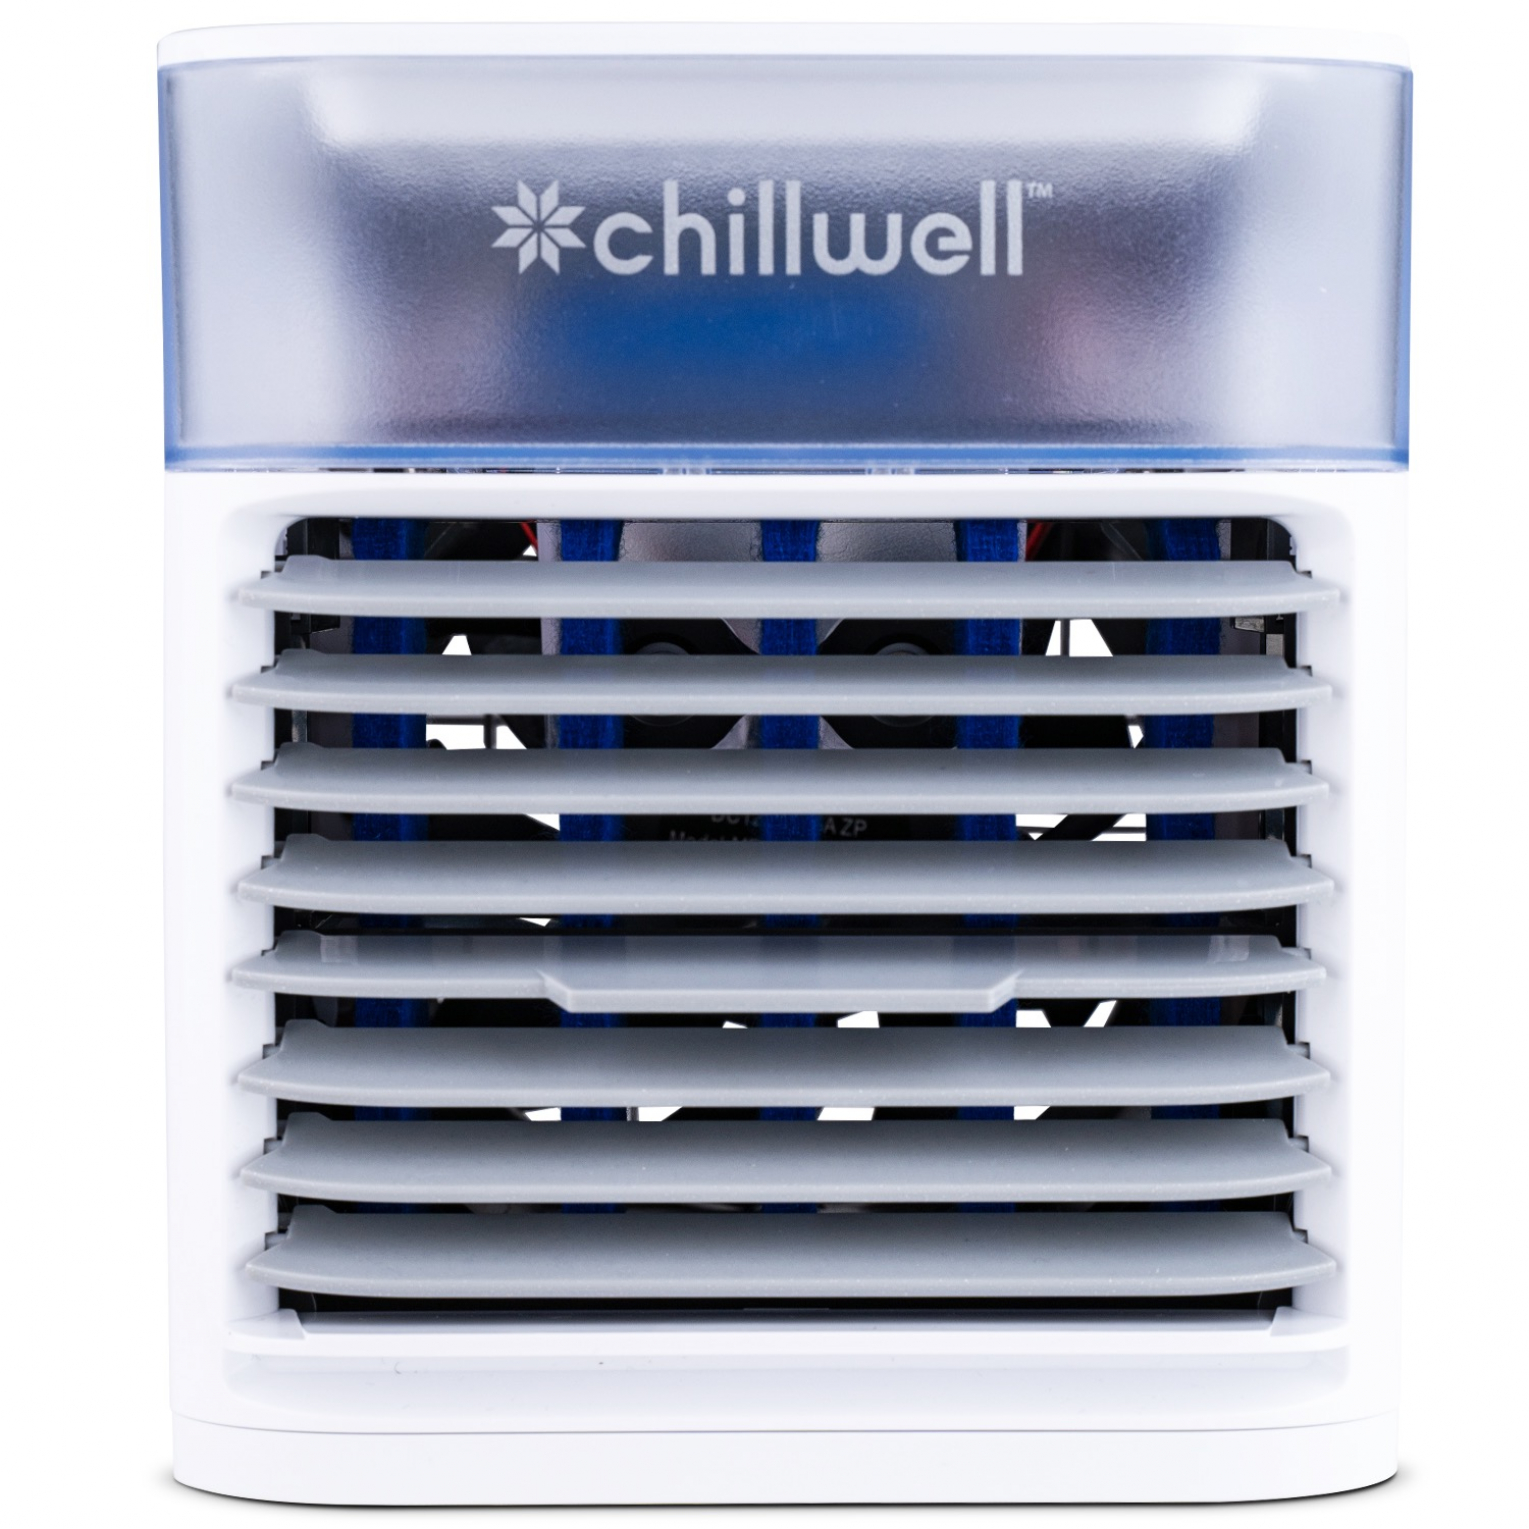 Chillwell Ac Chill Box Reviews